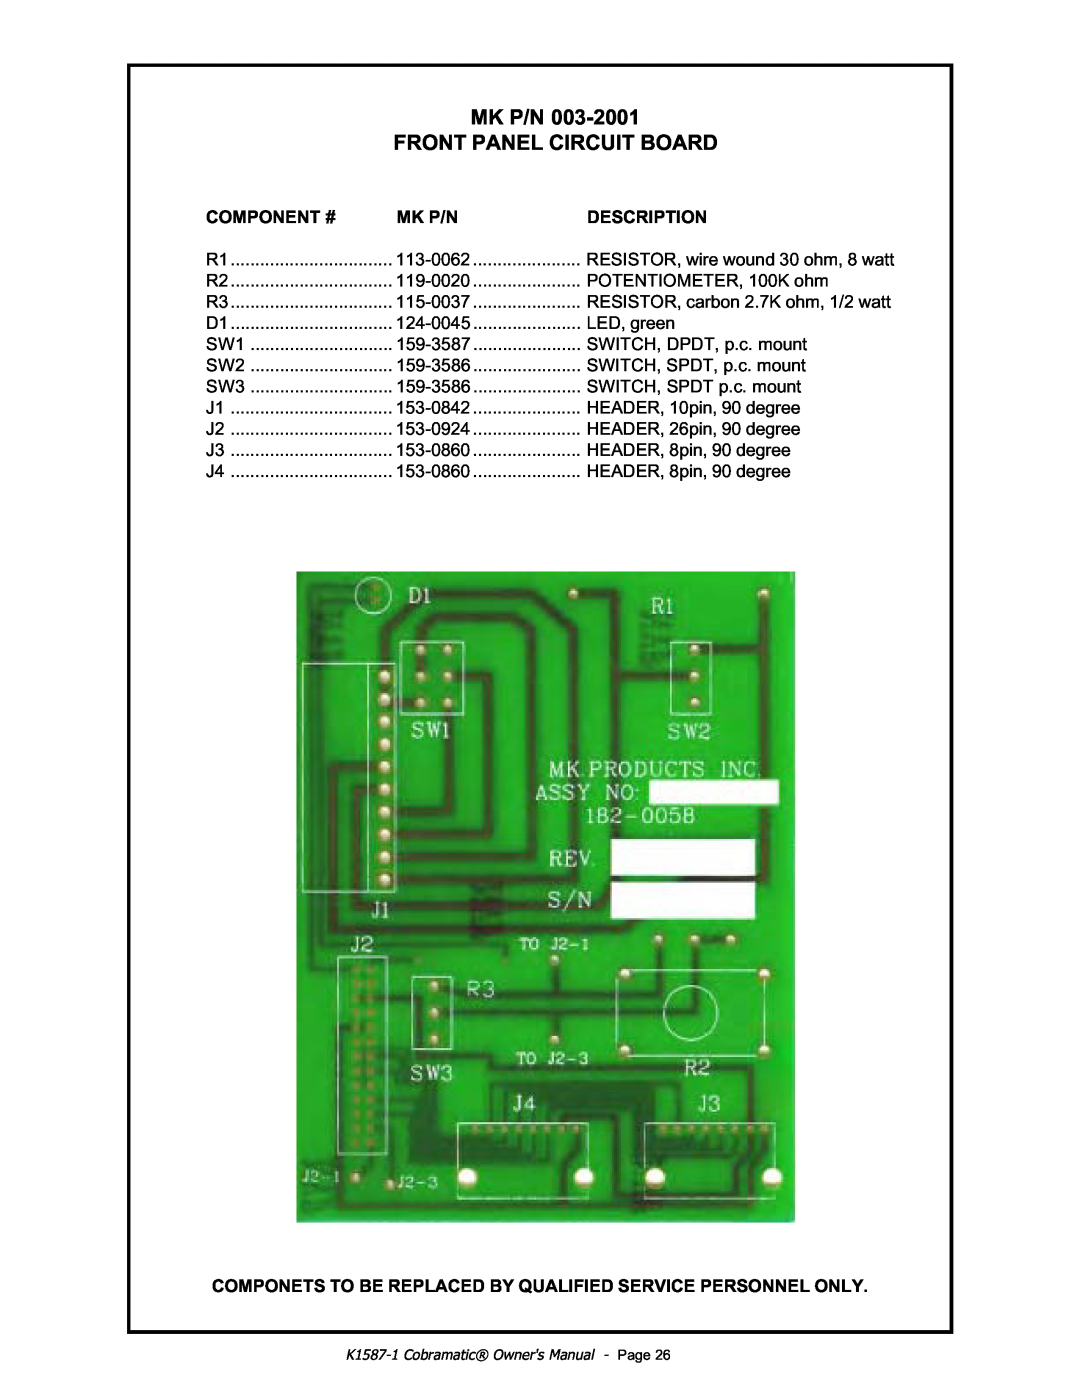 Lincoln Electric IM597 manual Mk P/N Front Panel Circuit Board, Component #, Description 